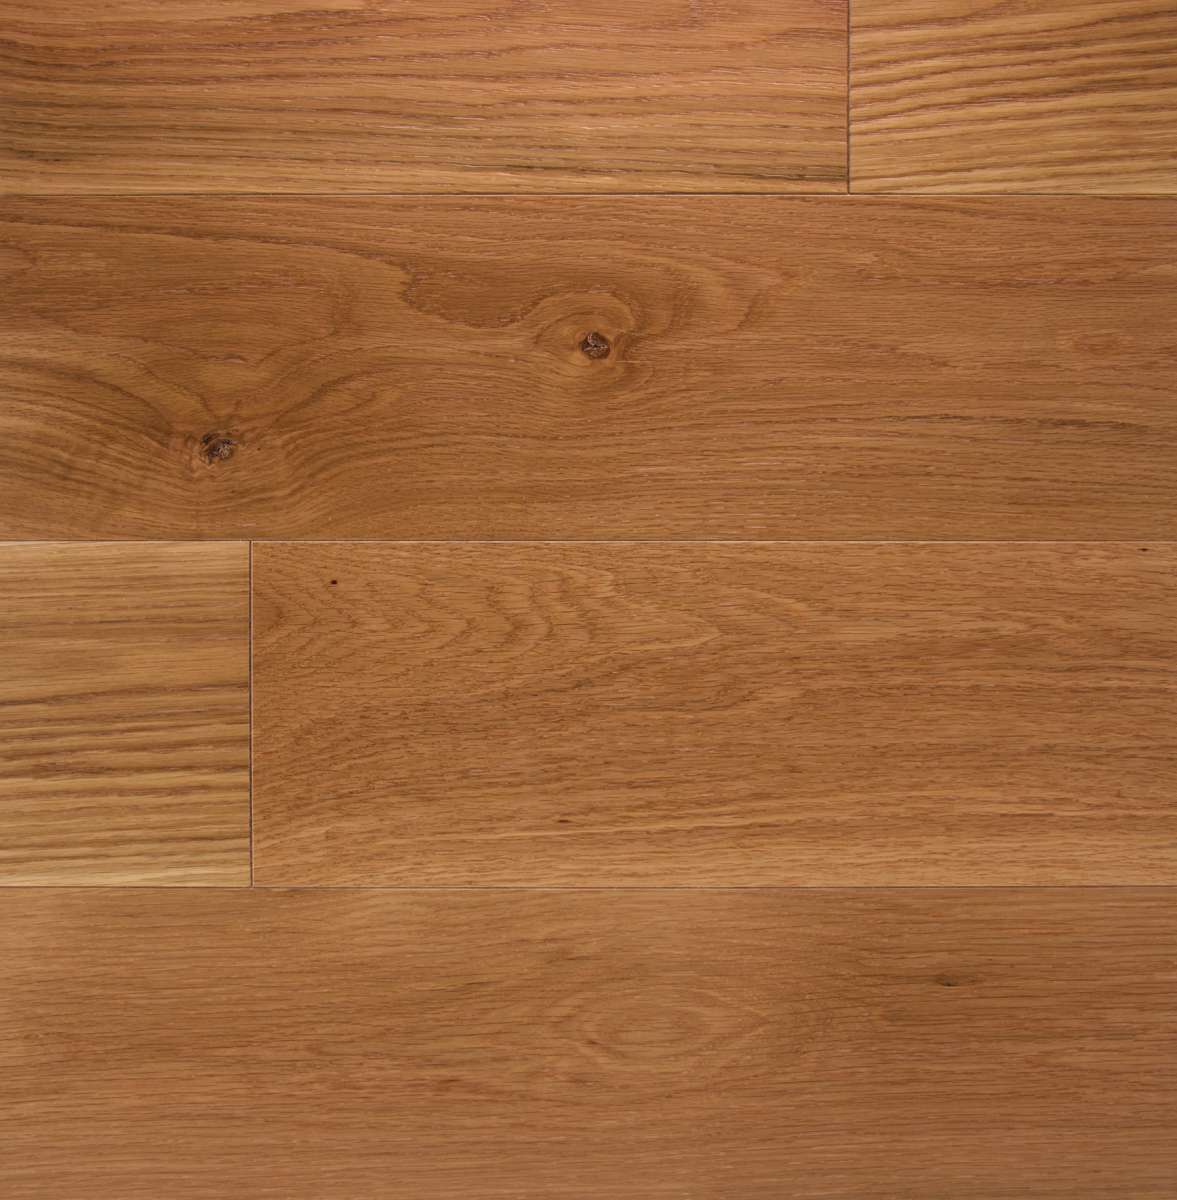 Somerset Hardwood Flooring, Mcdowell’s Hardwood Floors